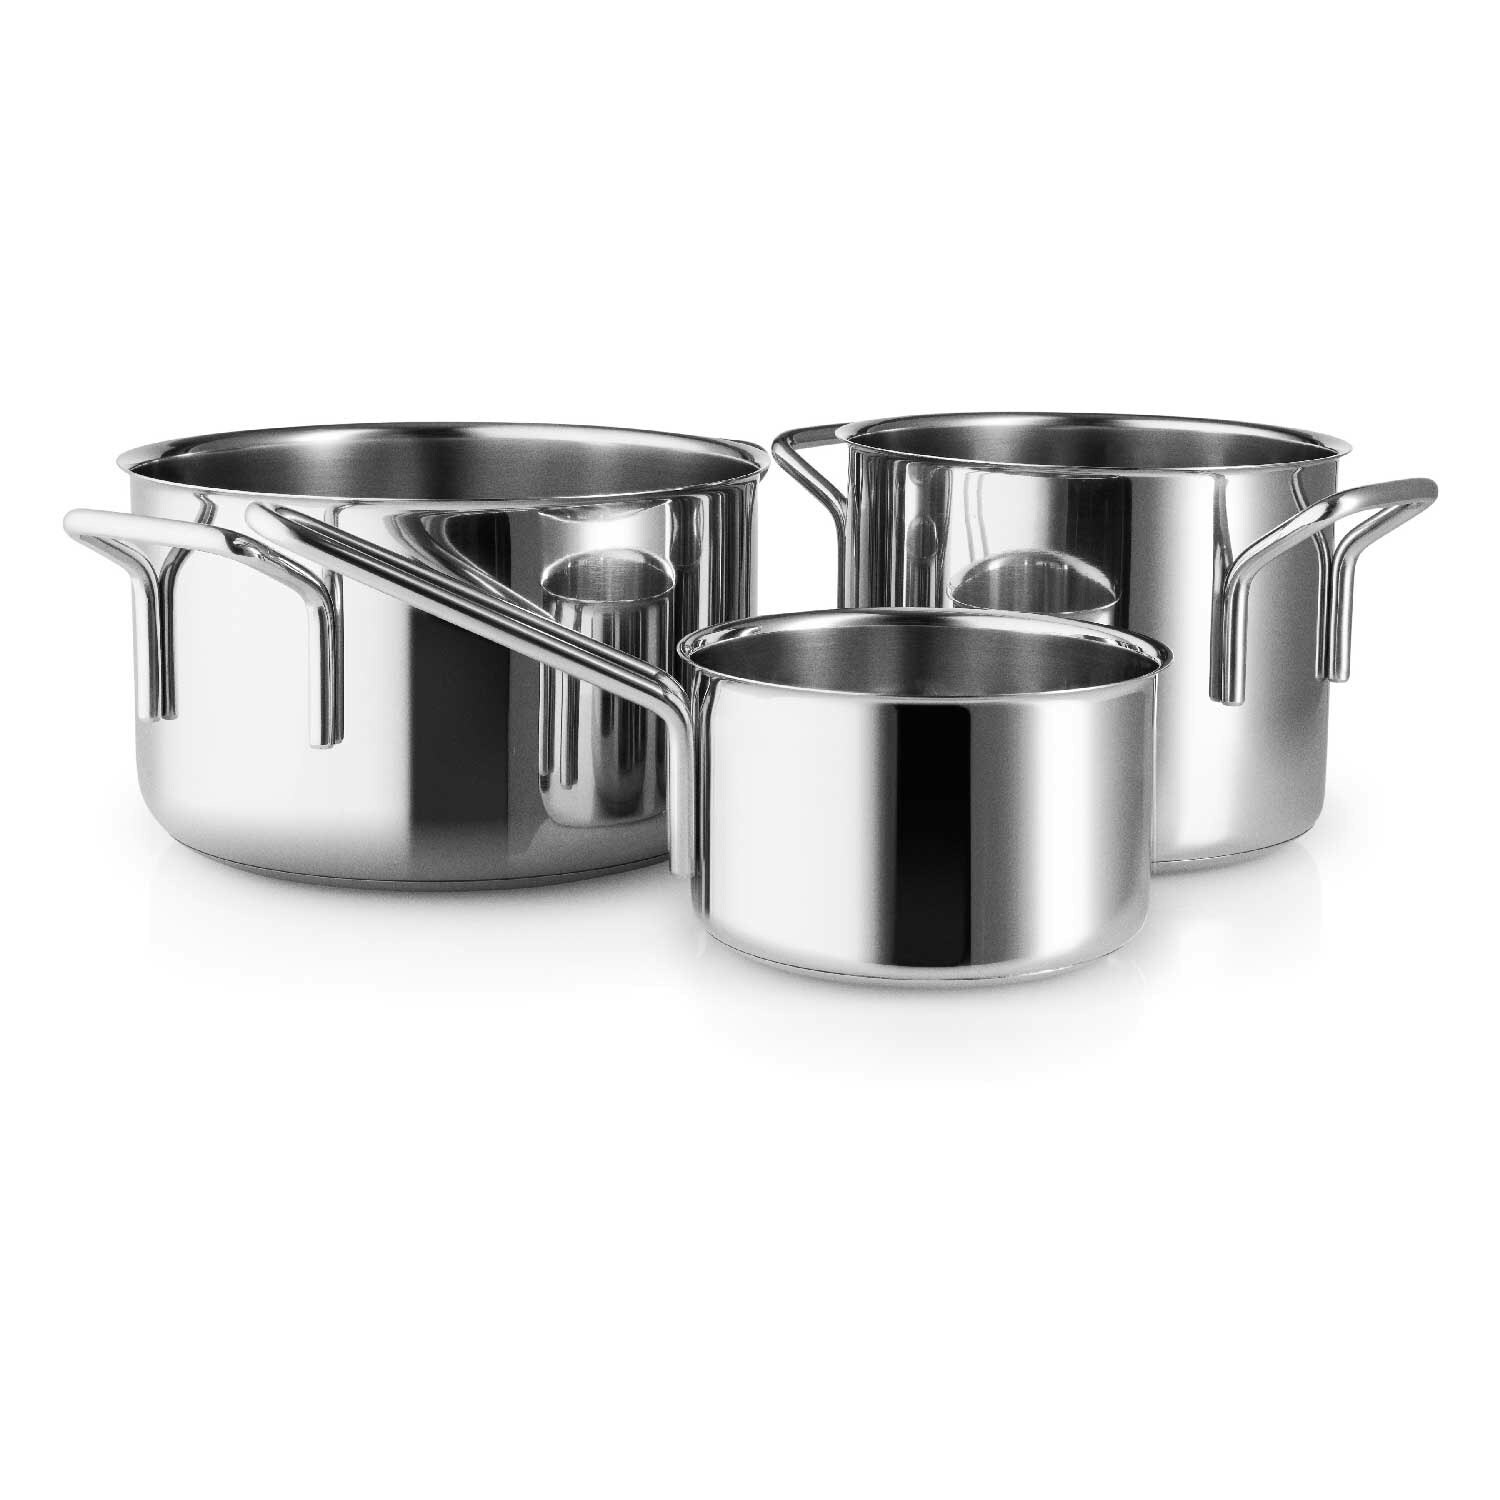 https://royaldesign.com/image/2/eva-solo-set-saucepan-pots-3-pcs-0